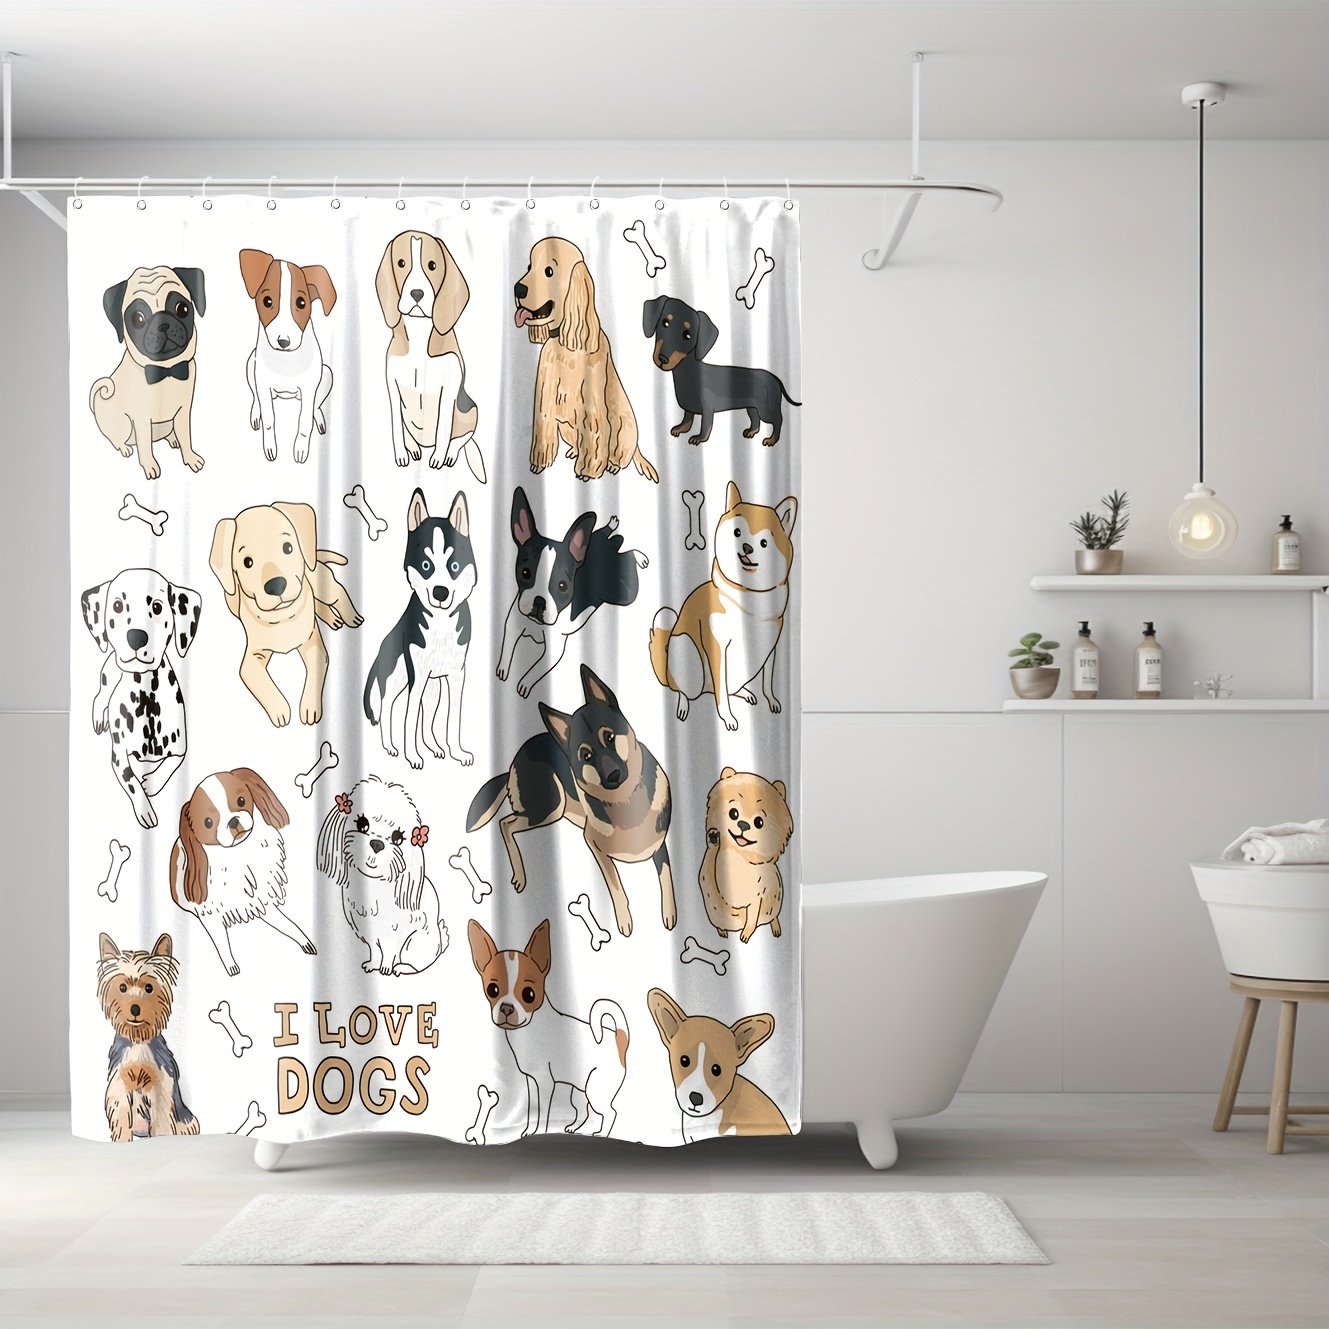 Bonita cortina de ducha con diseño de perros que llueve, divertida